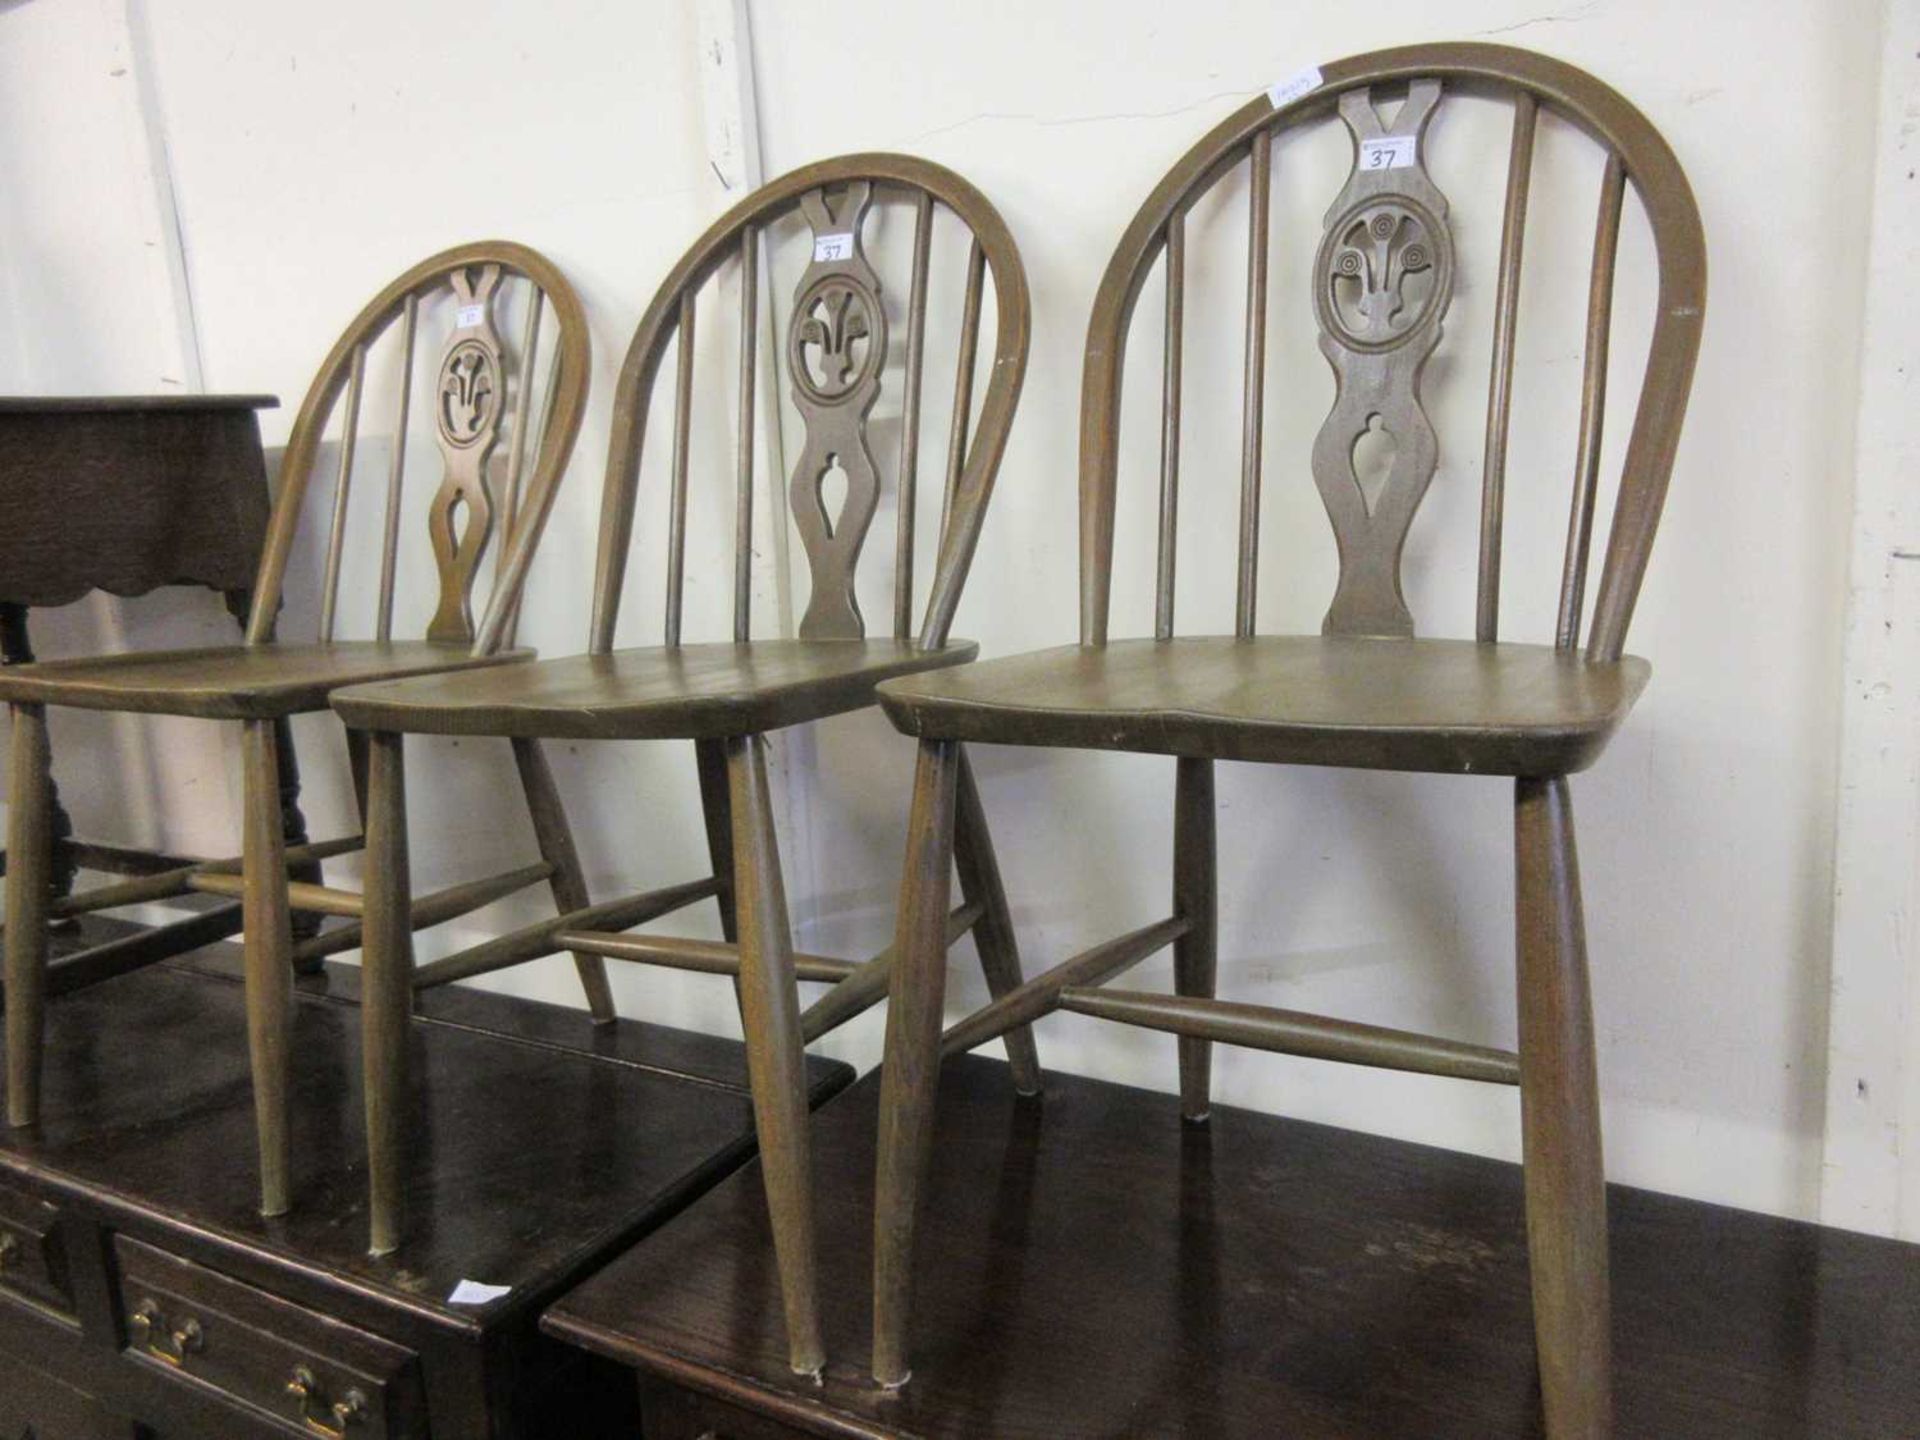 Three medium Ercol kitchen chairs